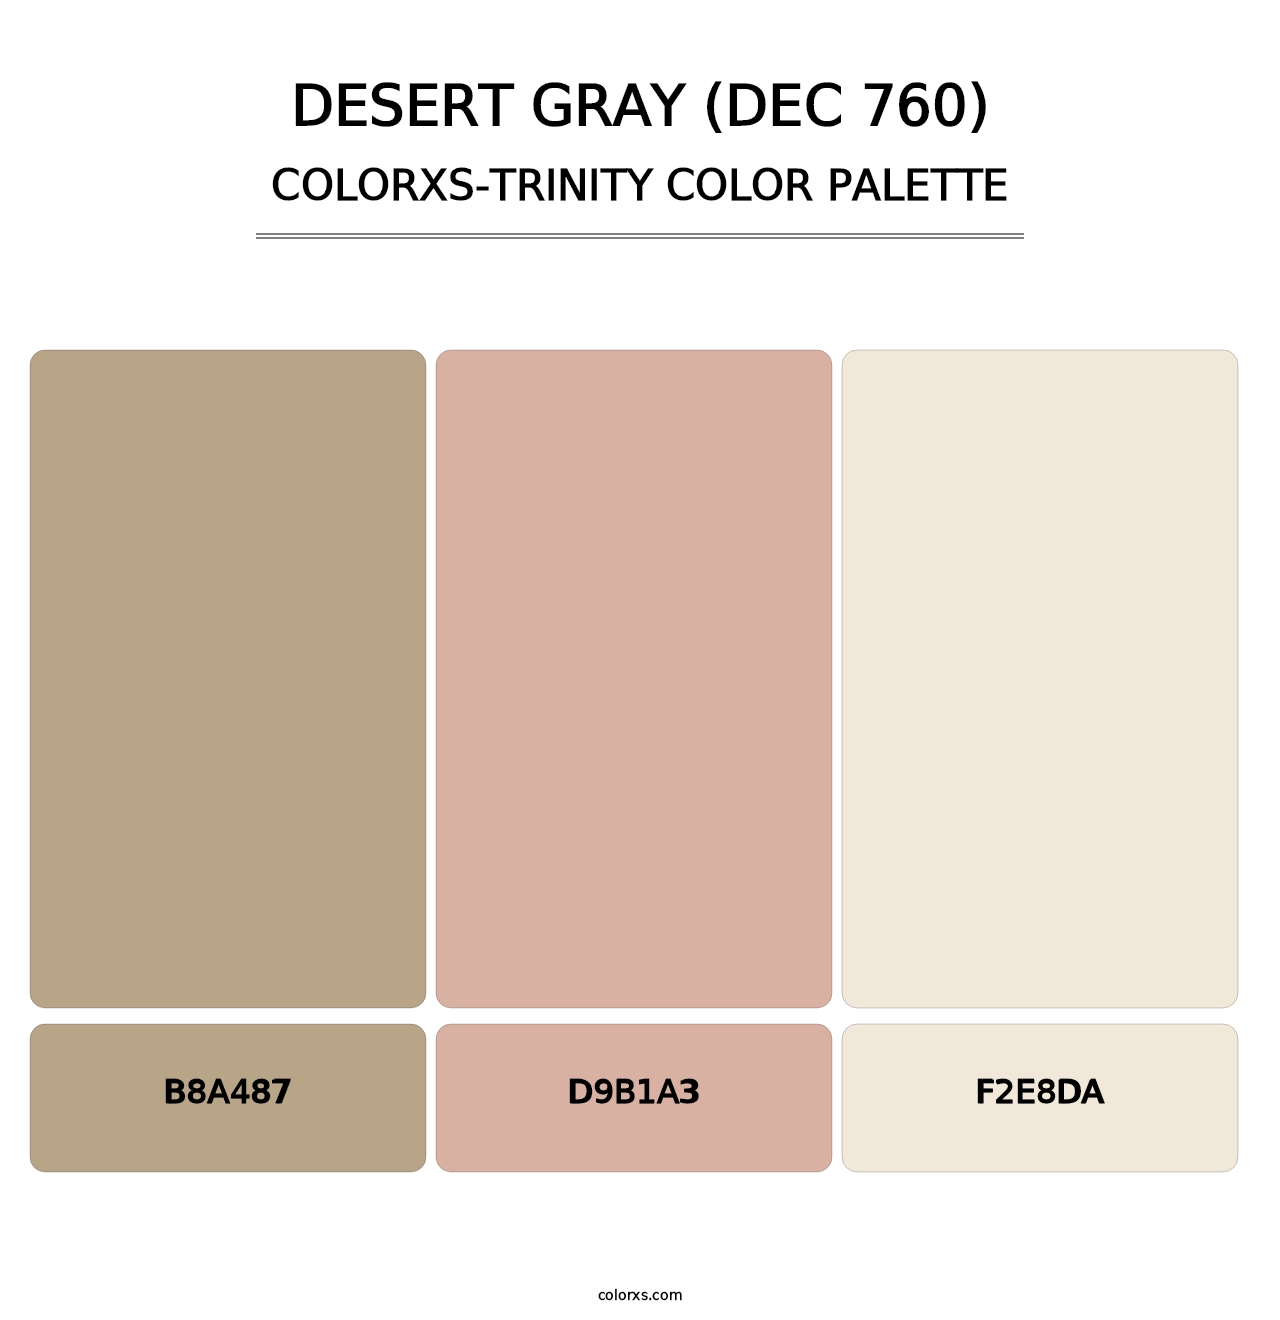 Desert Gray (DEC 760) - Colorxs Trinity Palette